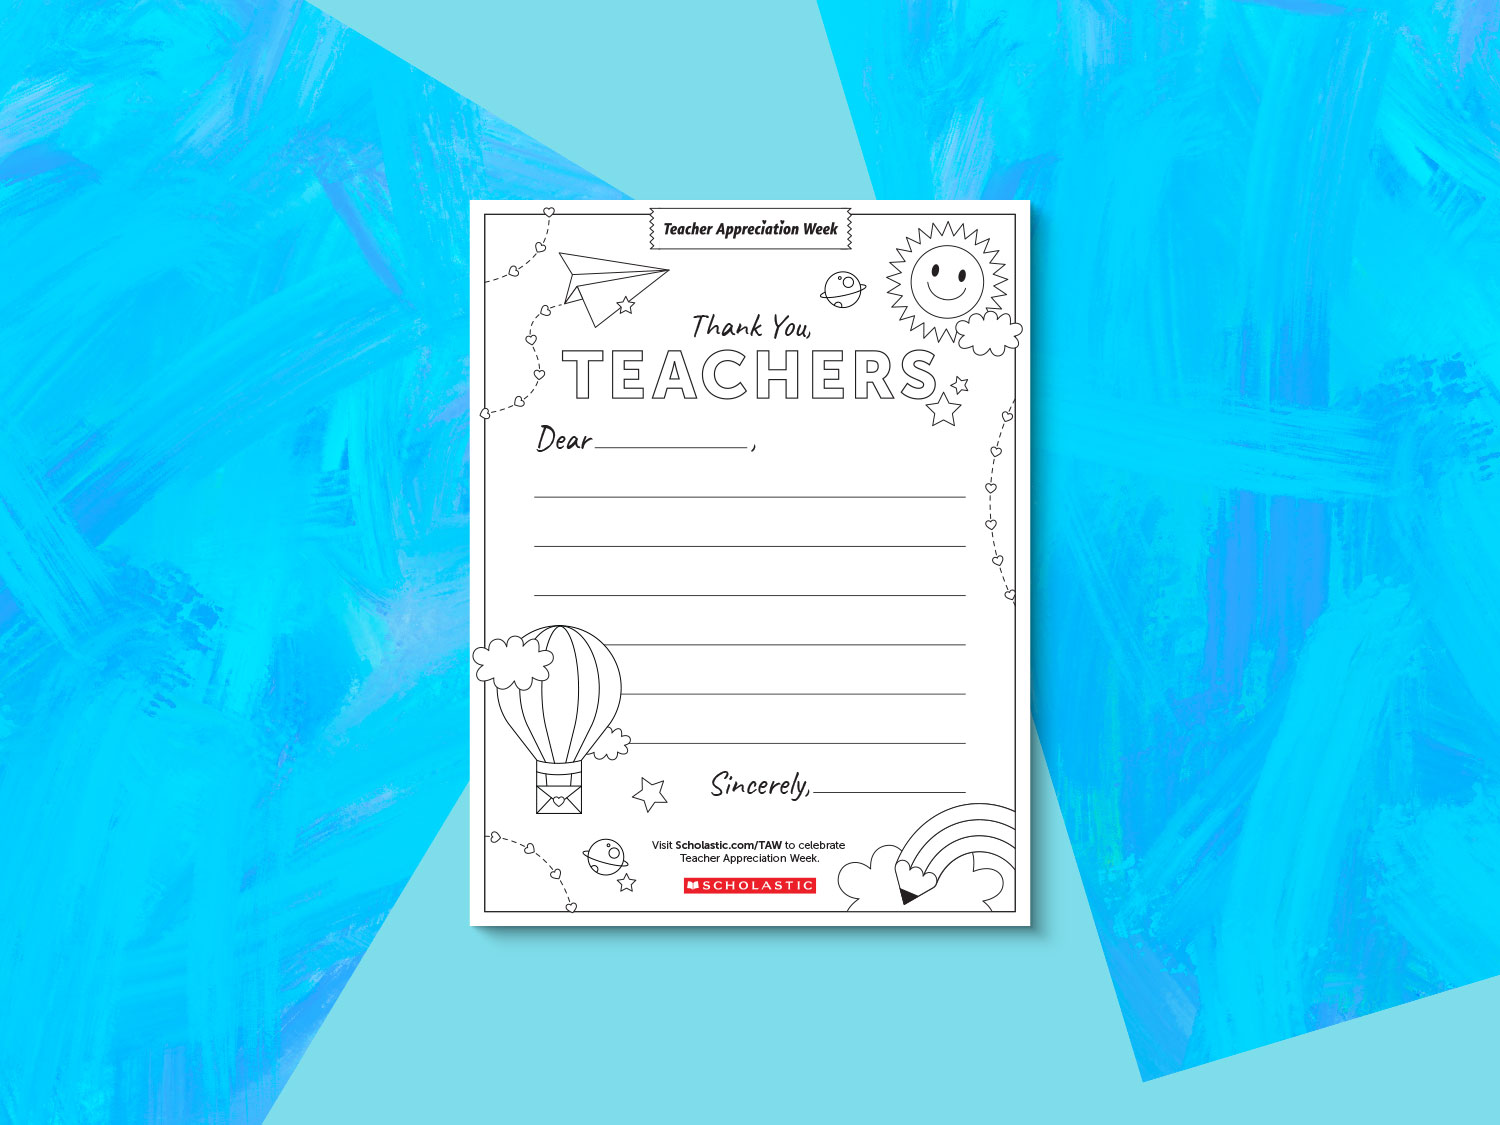 Thank You Letter for Teacher Appreciation Week | Scholastic